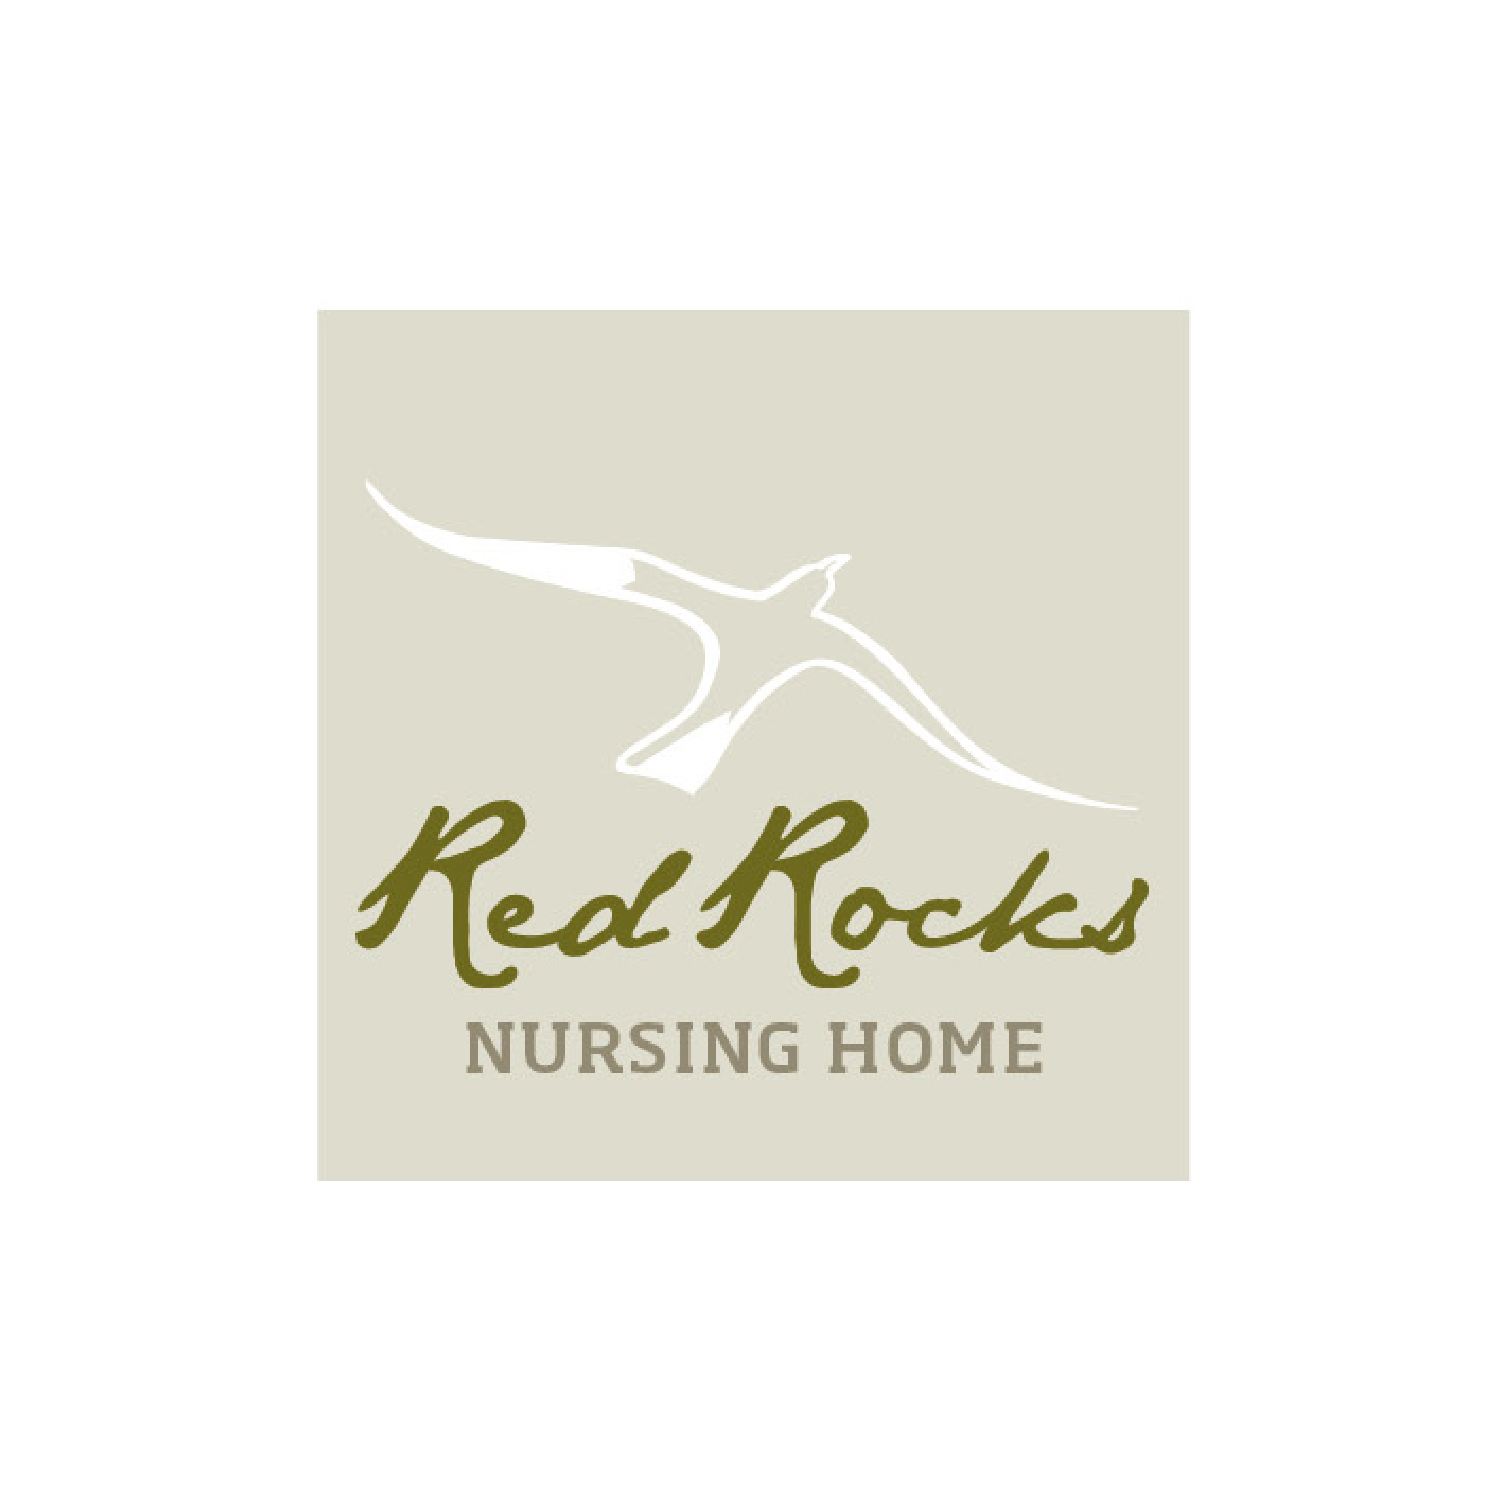 Red Rocks Nursing Home logo